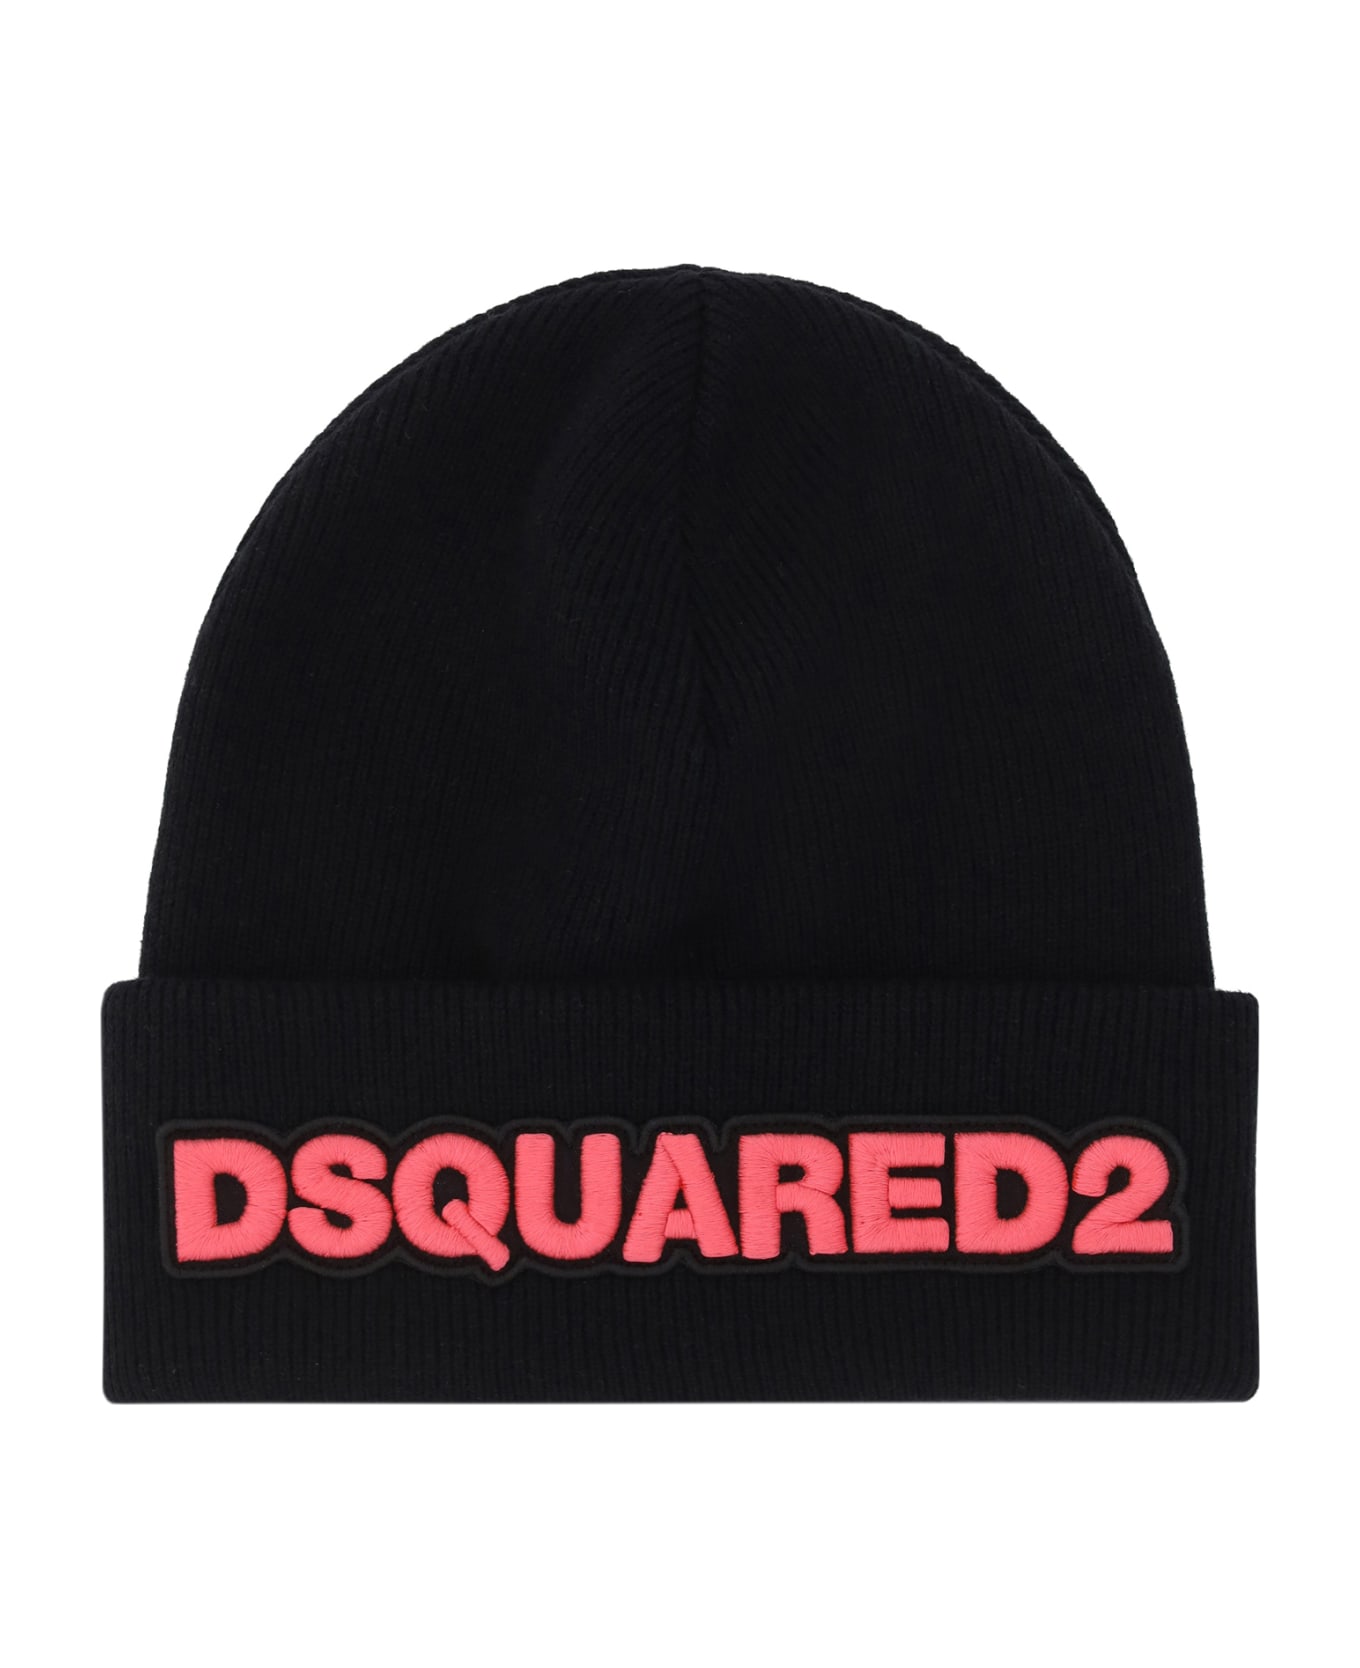 Dsquared2 Hat - M2747 帽子